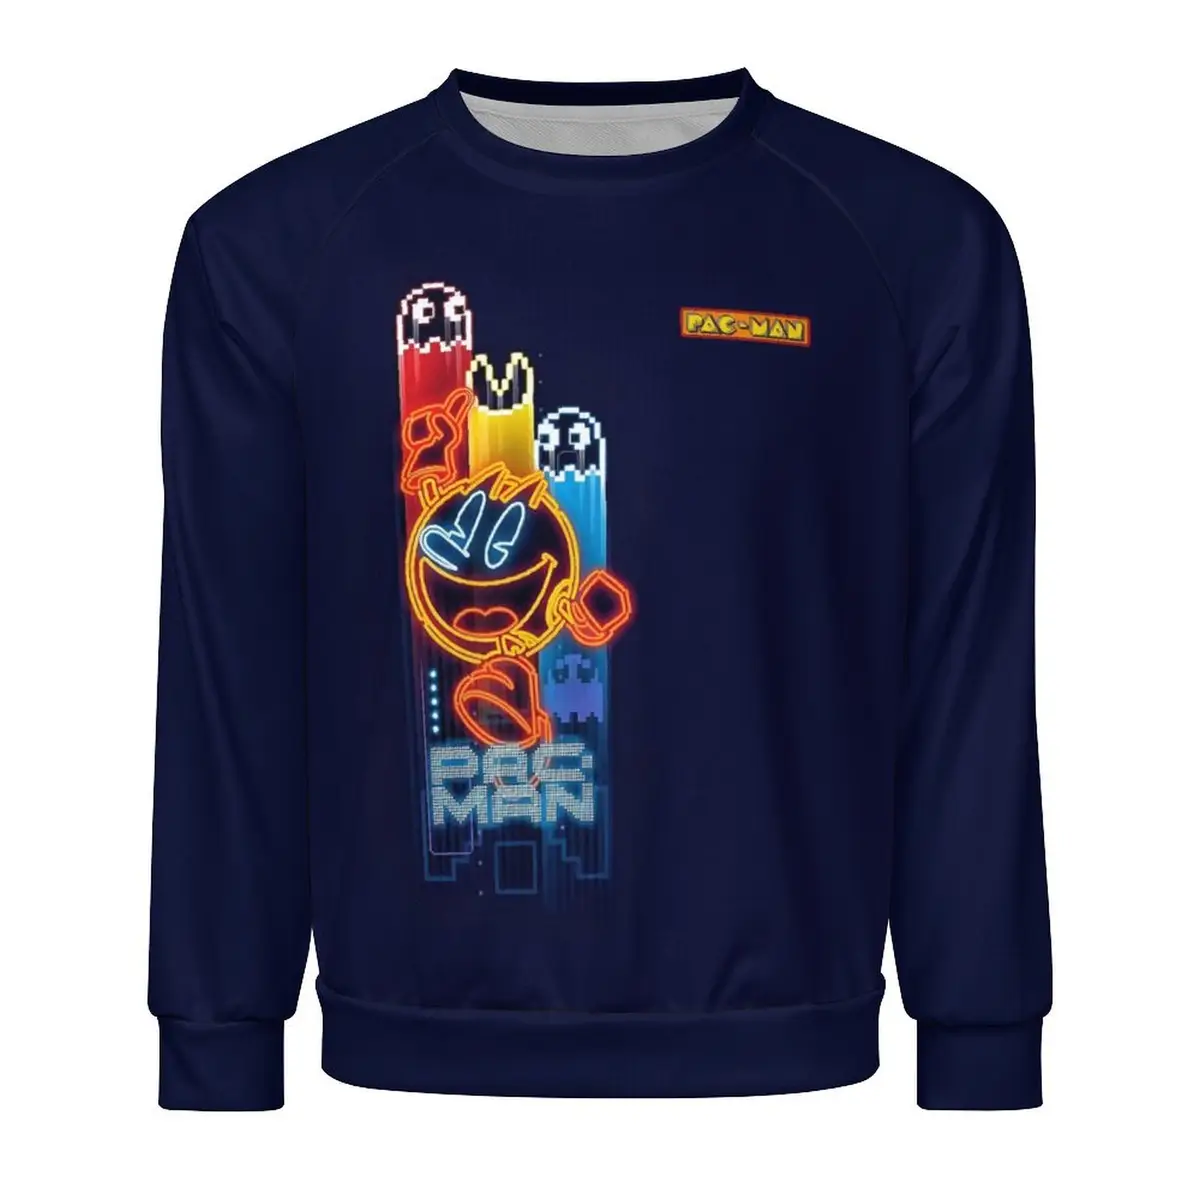 Dark Blue Pac-Man Men-Youth Crewneck Sweatshirt, Vintage Video Game Apparel Unisex Comfortable Sweater Cool Kiddo 12